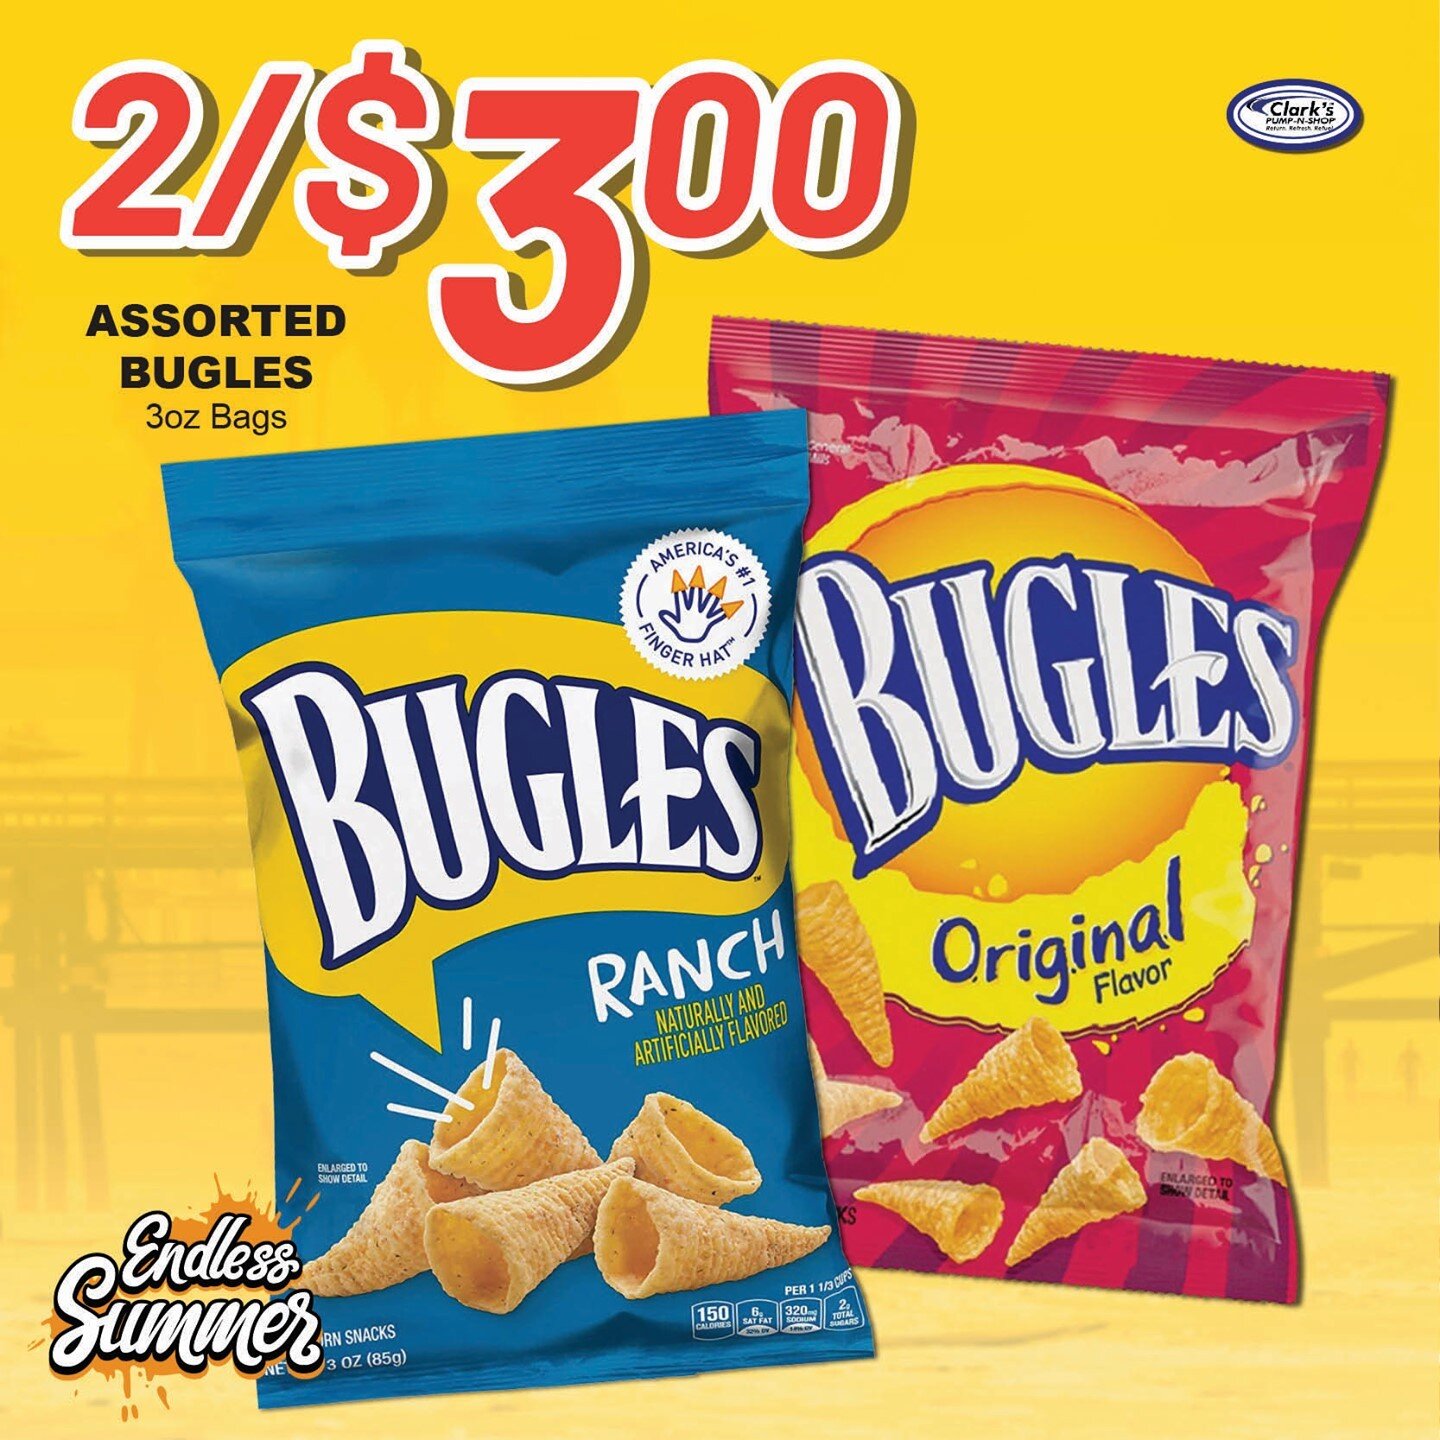 Bugles Assorted Flavors 2 for $3 
#ReturnRefreshRefuel